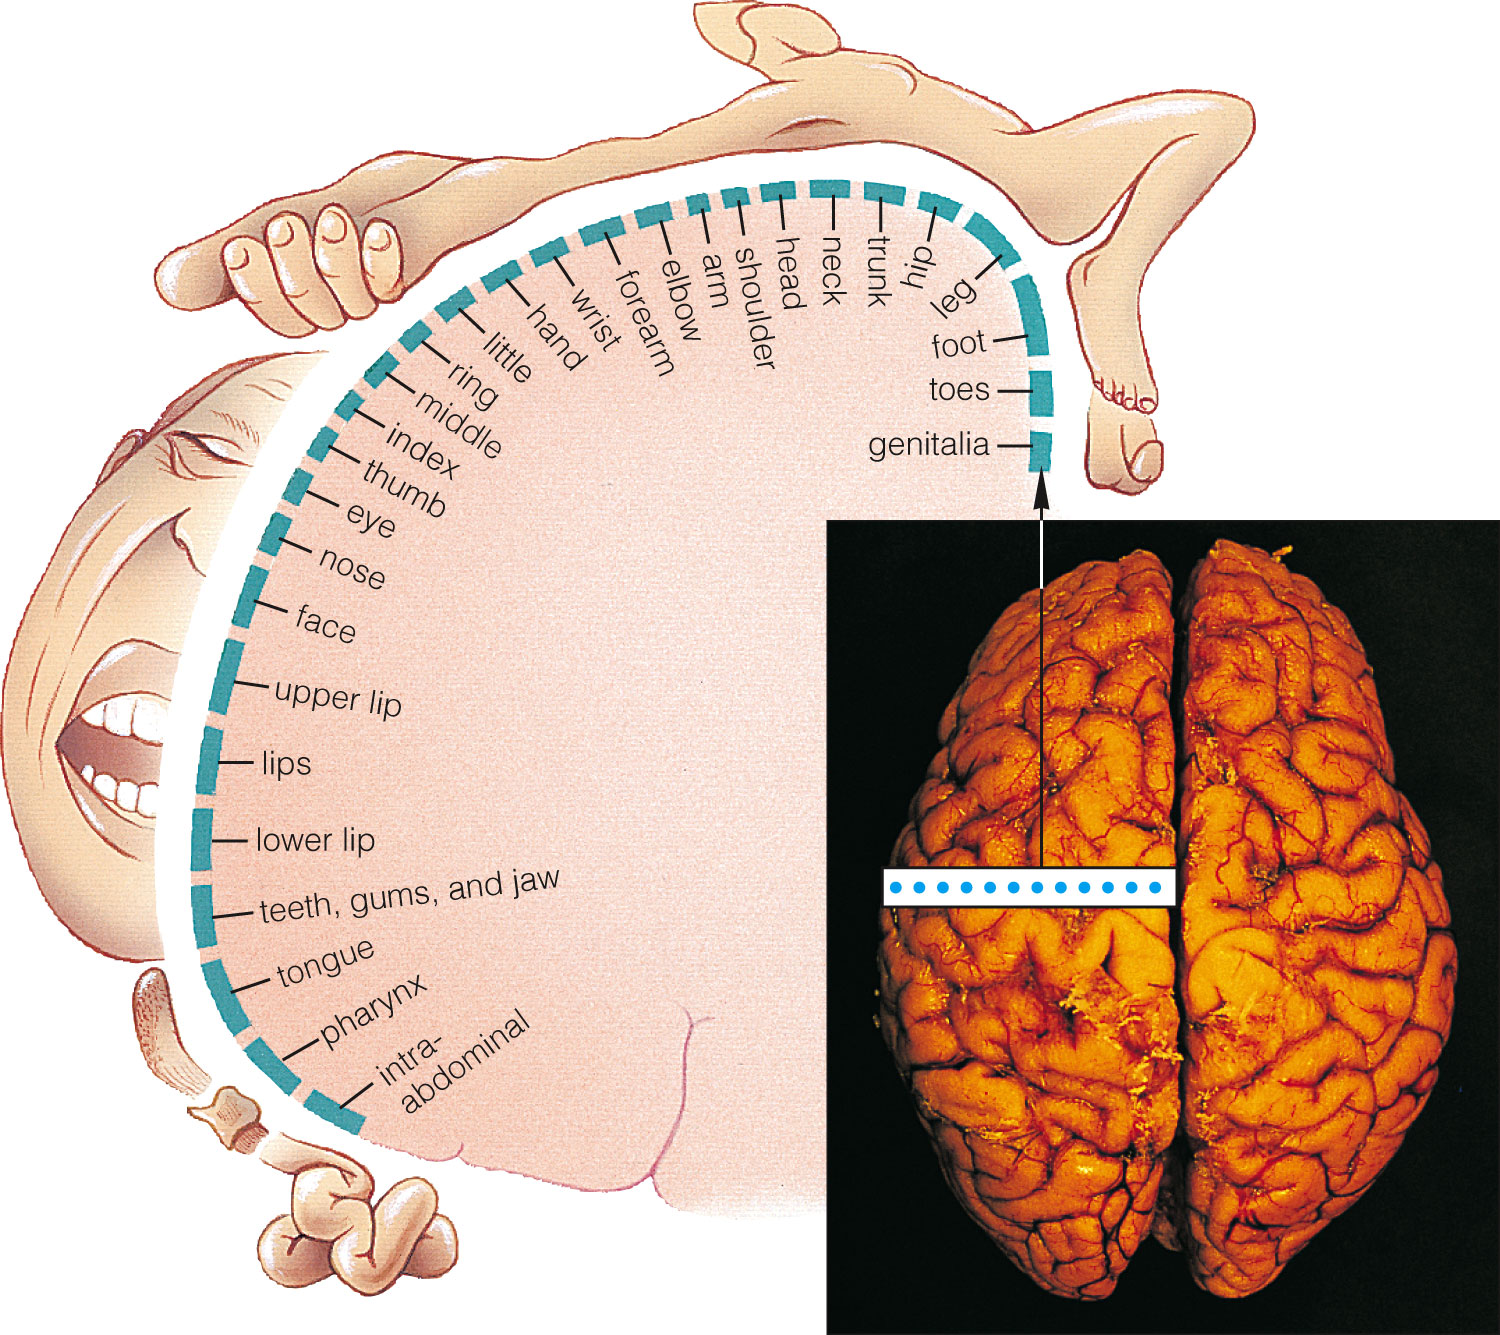 Body Regions in the Somatosensory Cortex